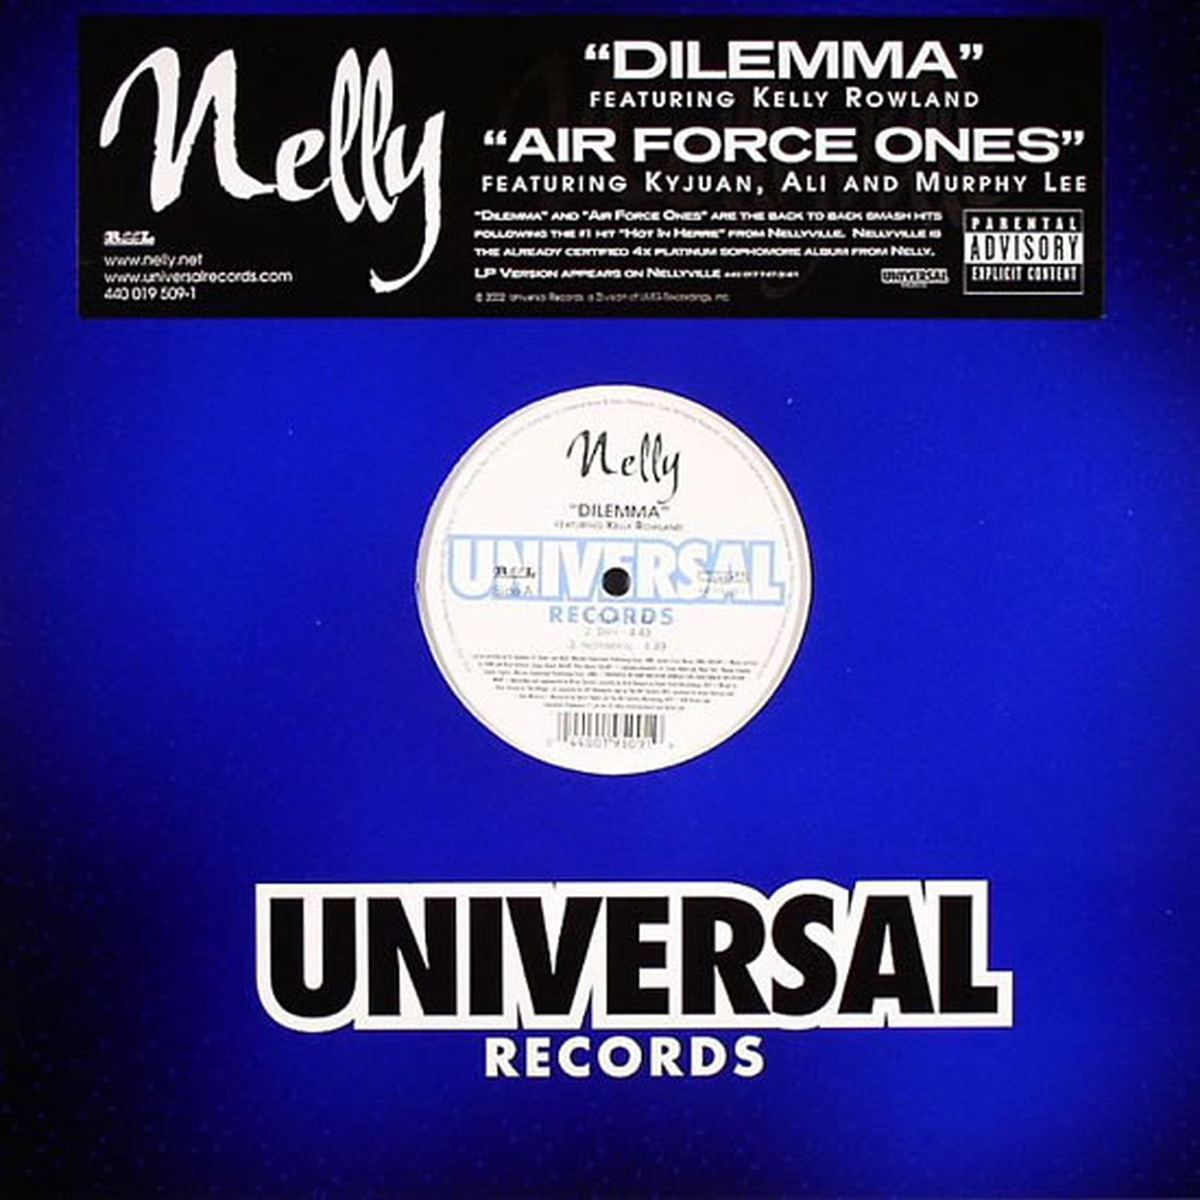 Dilemma feat kelly rowland. Nelly Dilemma. Dilemma Nelly feat Kelly Rowland. Nelly feat. Kelly Rowland.